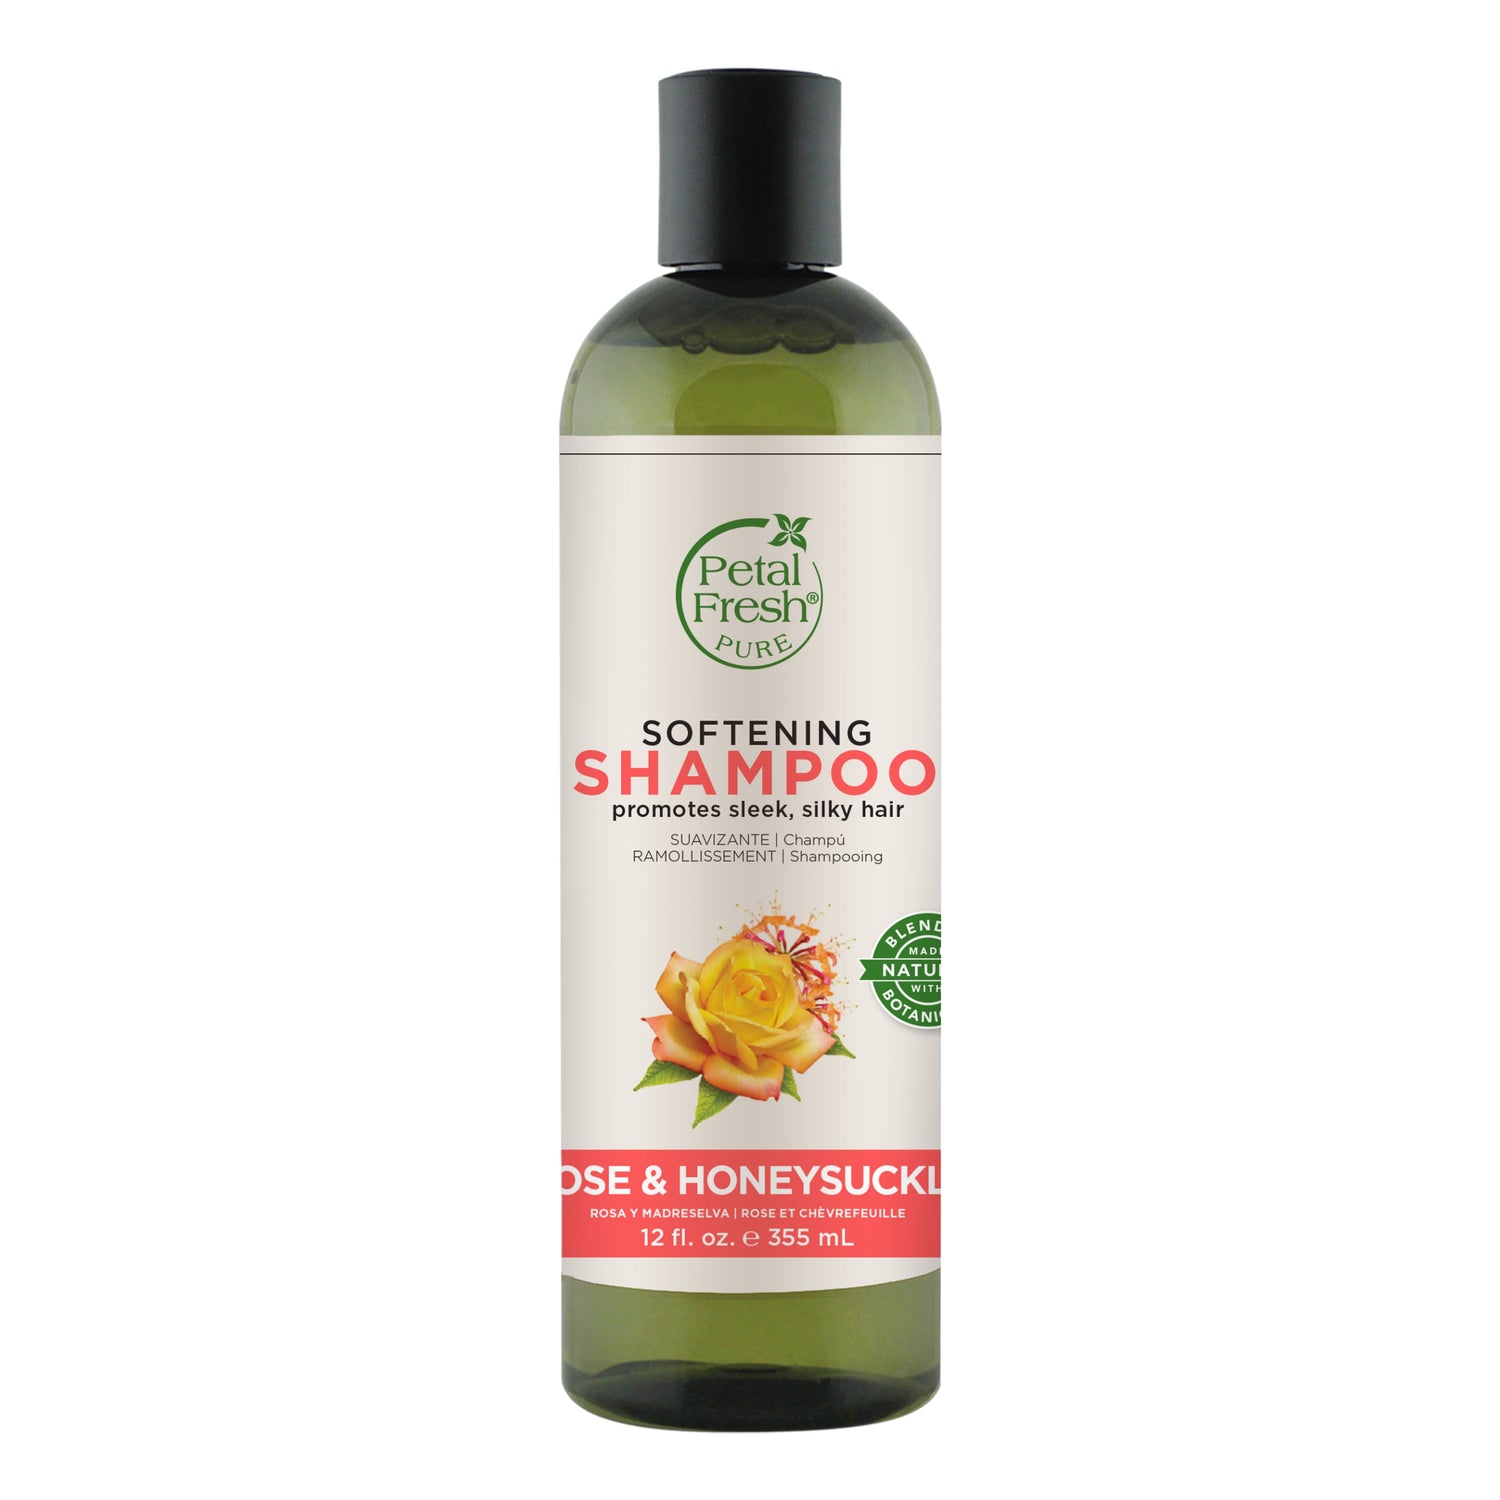 Petal Fresh Softening Rose &amp; Honeysuckle Shampoo